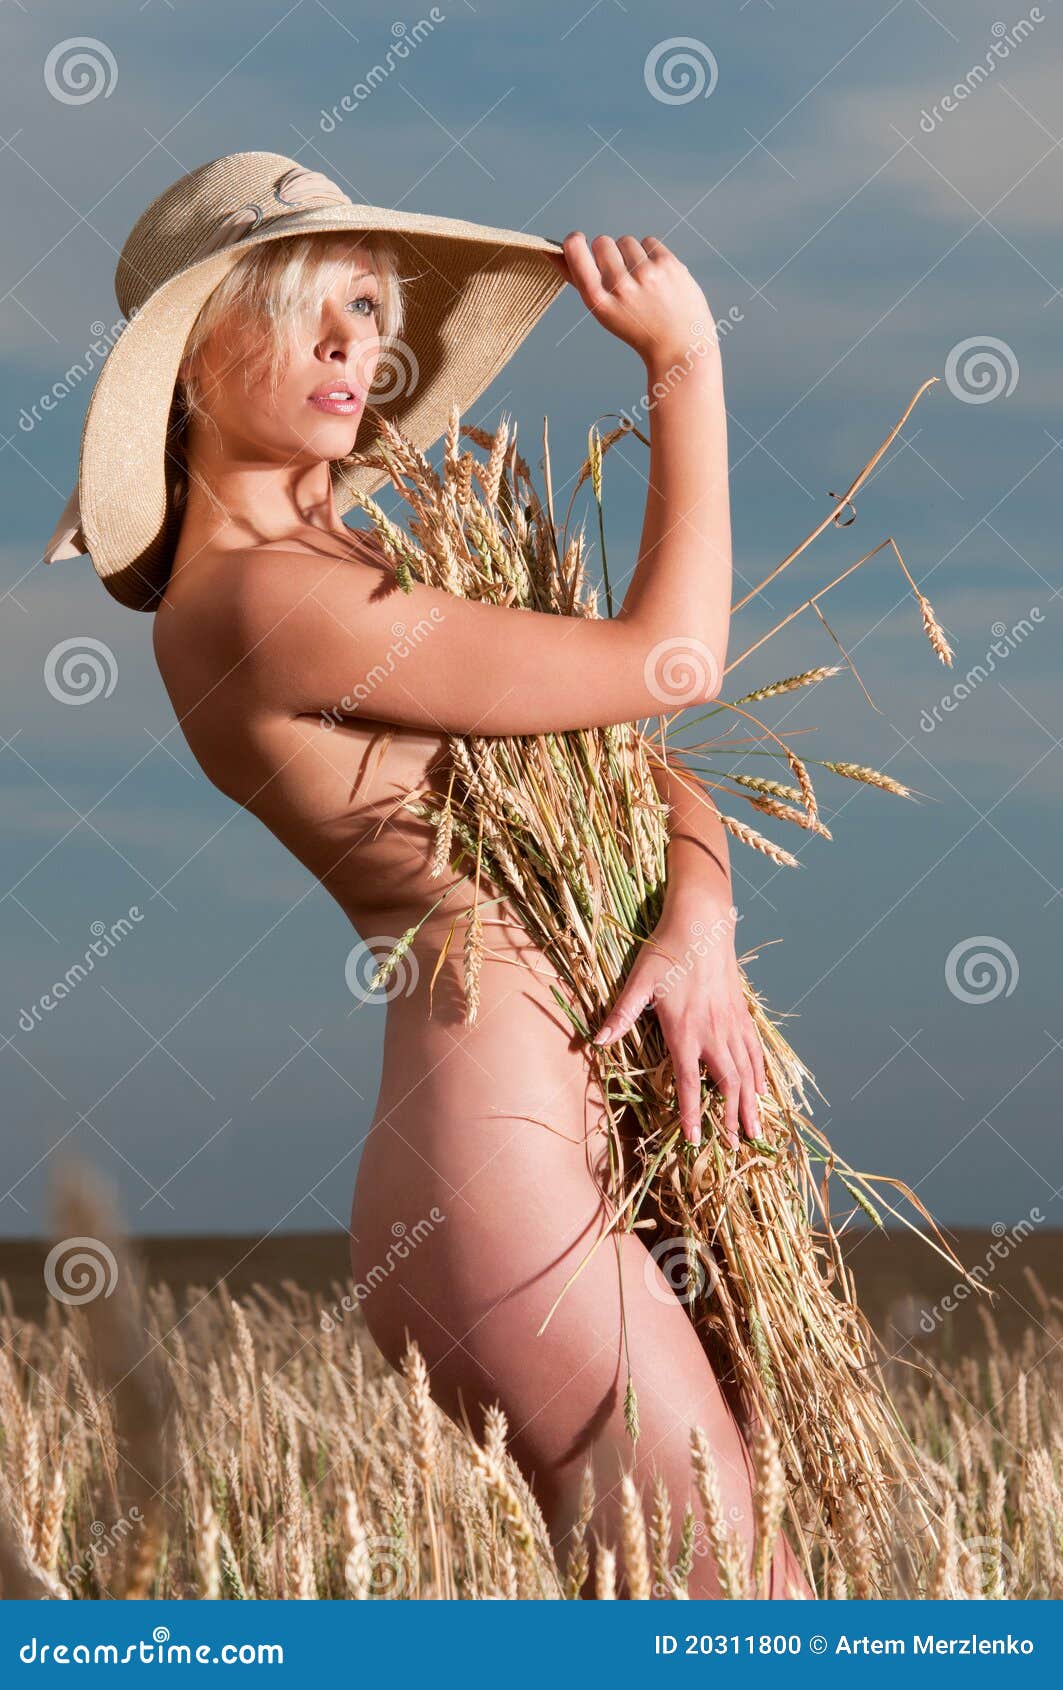 Northern Ireland Female Models Barley Desnudo Boys